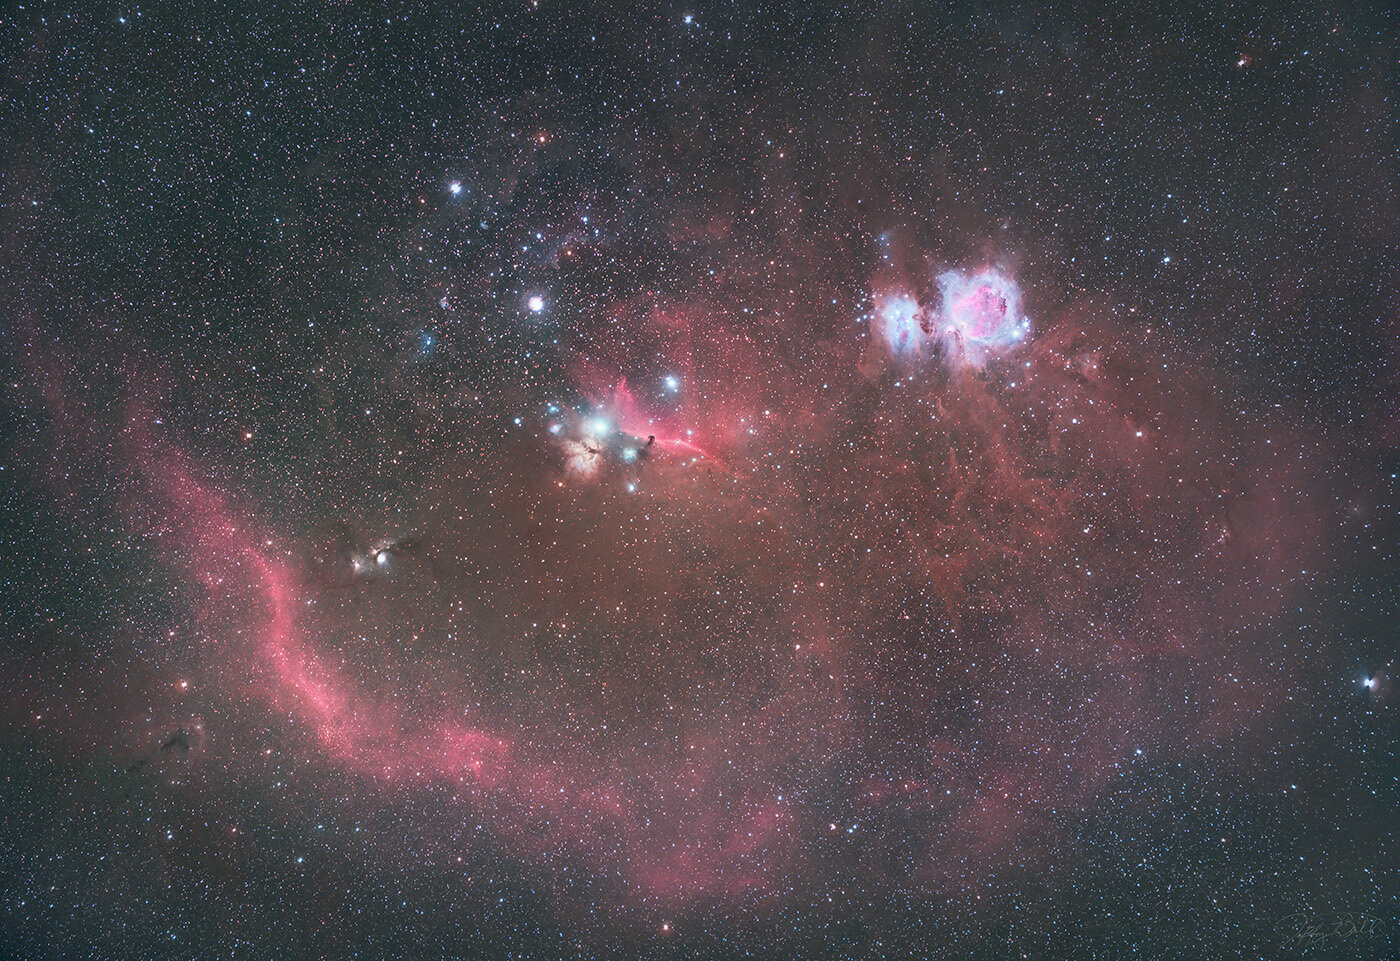 Orion's Molecular Cloud